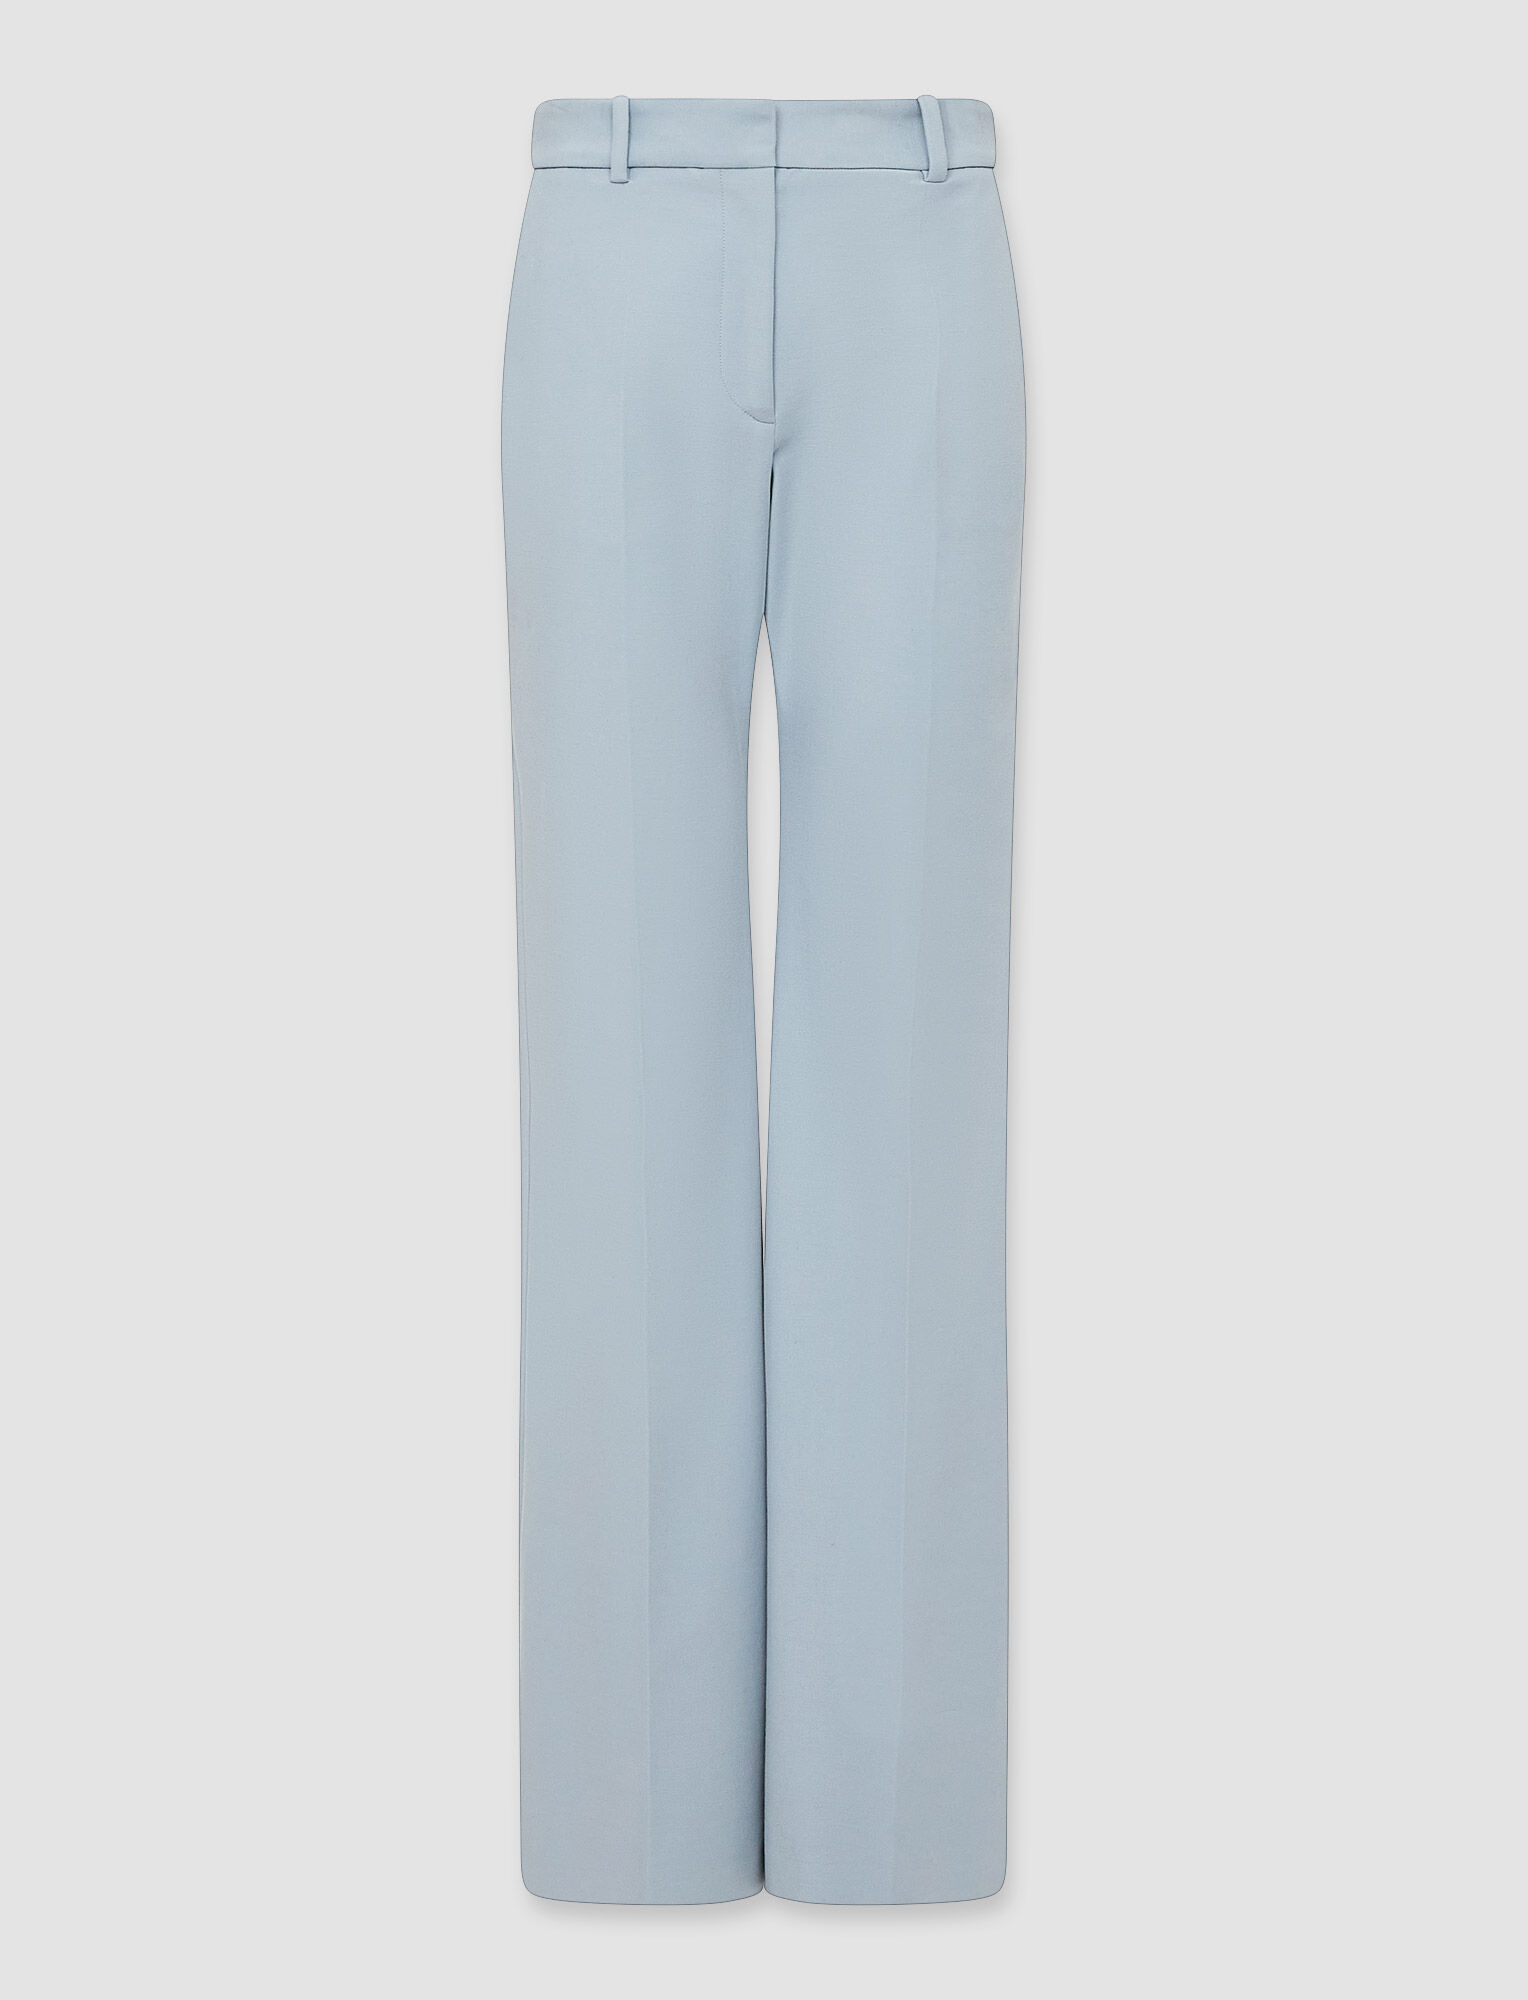 Joseph, Toile Stretch Tafira Trousers – Shorter Length, in Dusty Blue